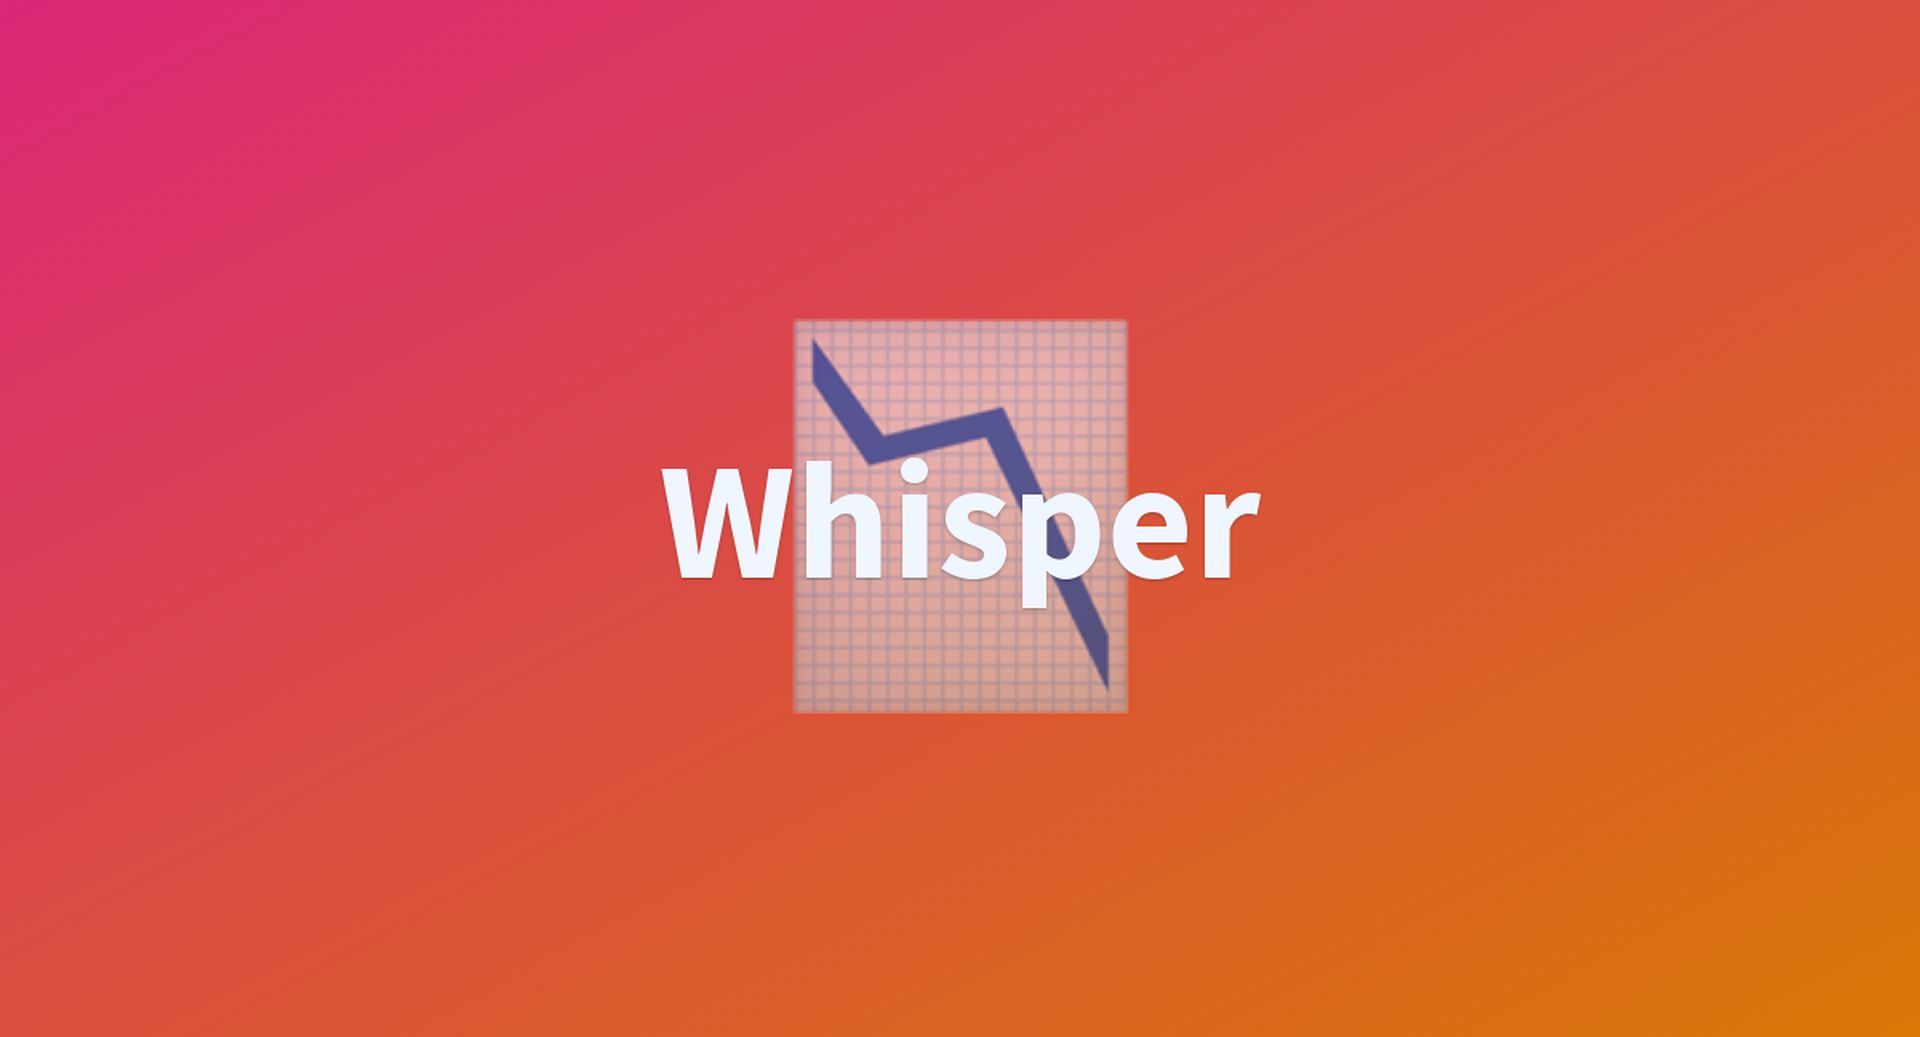 WhisperX